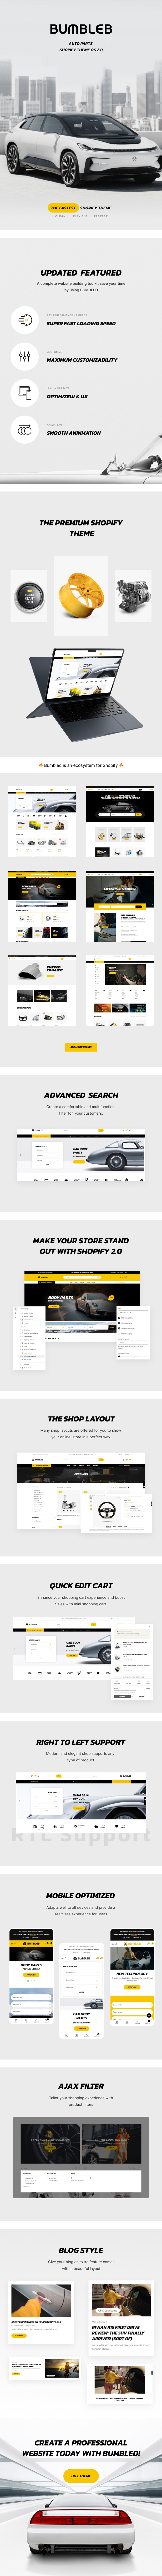 Bumbleb - Auto Parts Shopify Theme OS 2.0 - 1